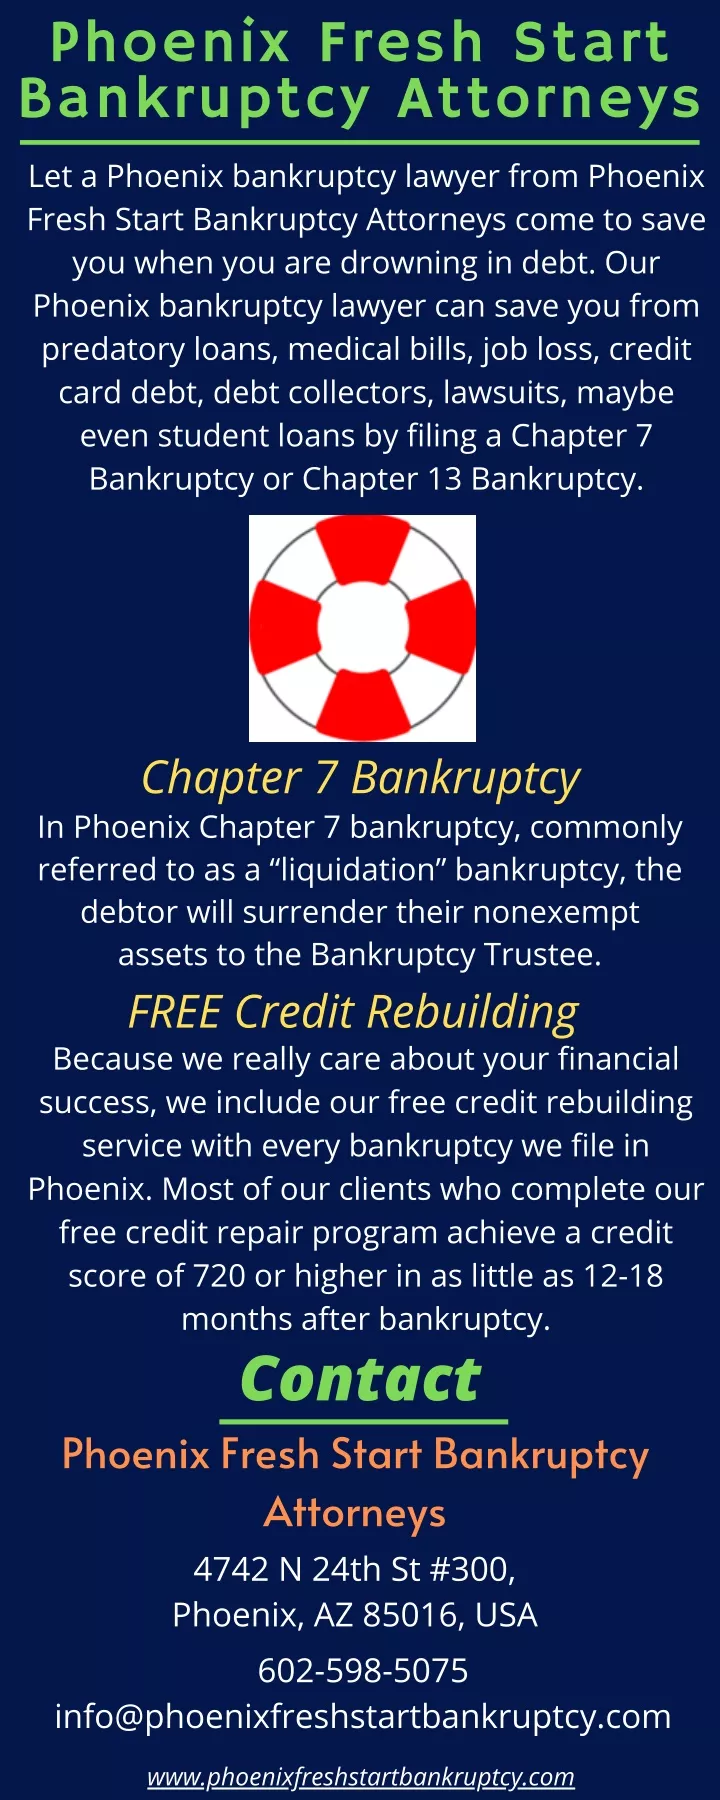 phoenix fresh start bankruptcy attorneys